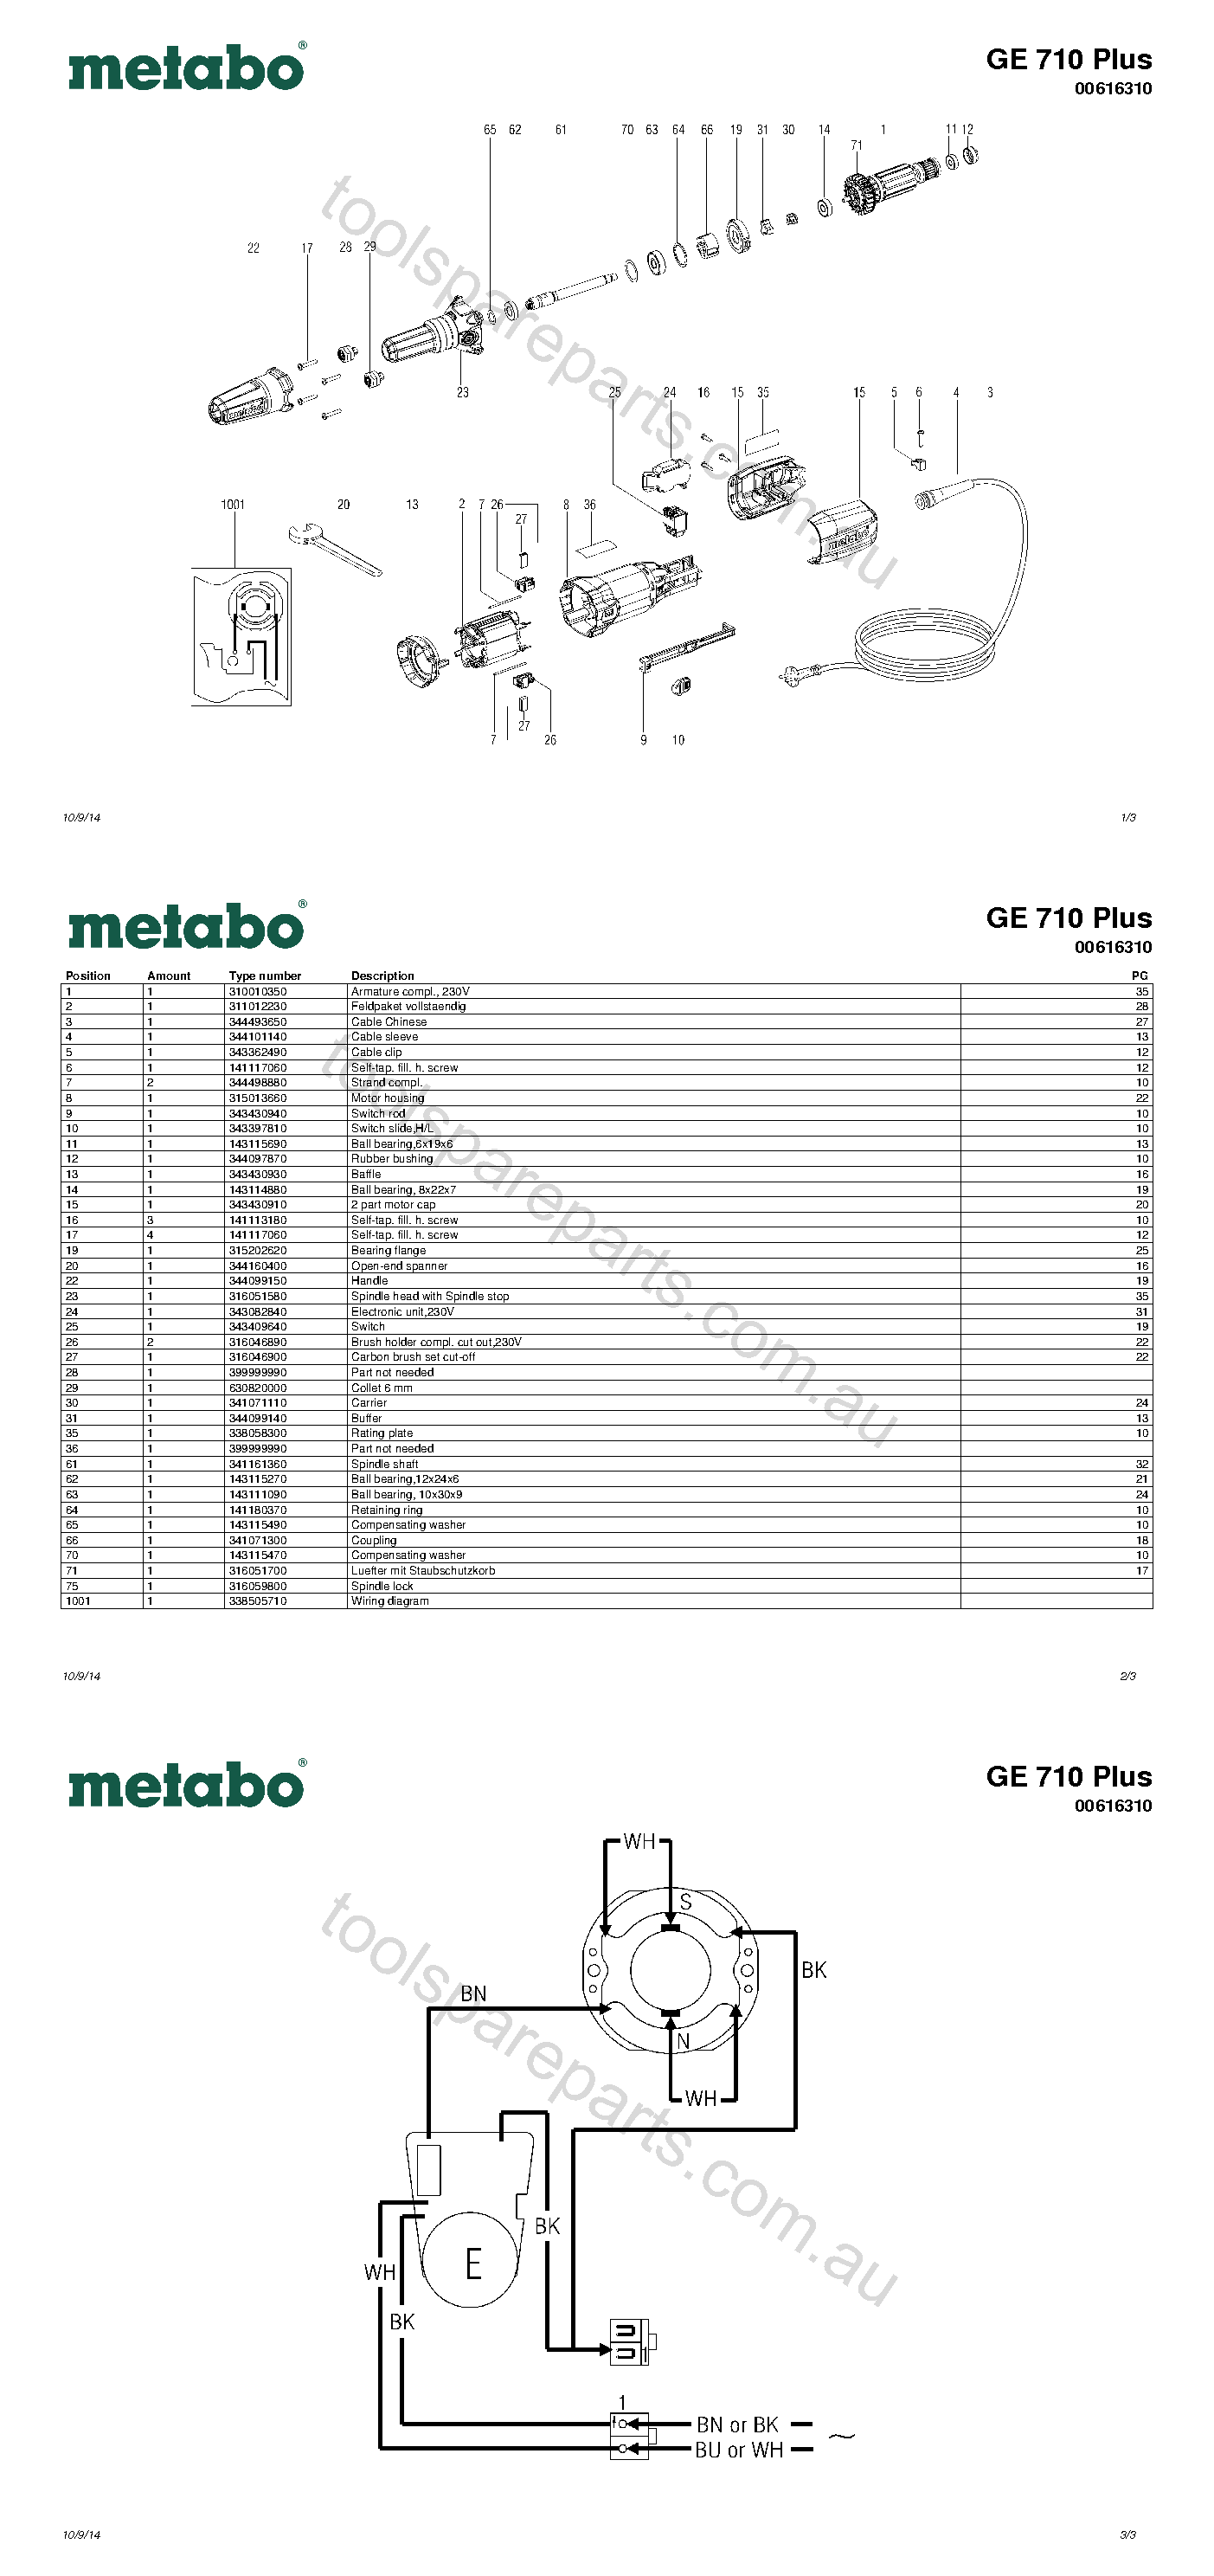 Metabo GE 710 Plus 00616310  Diagram 1